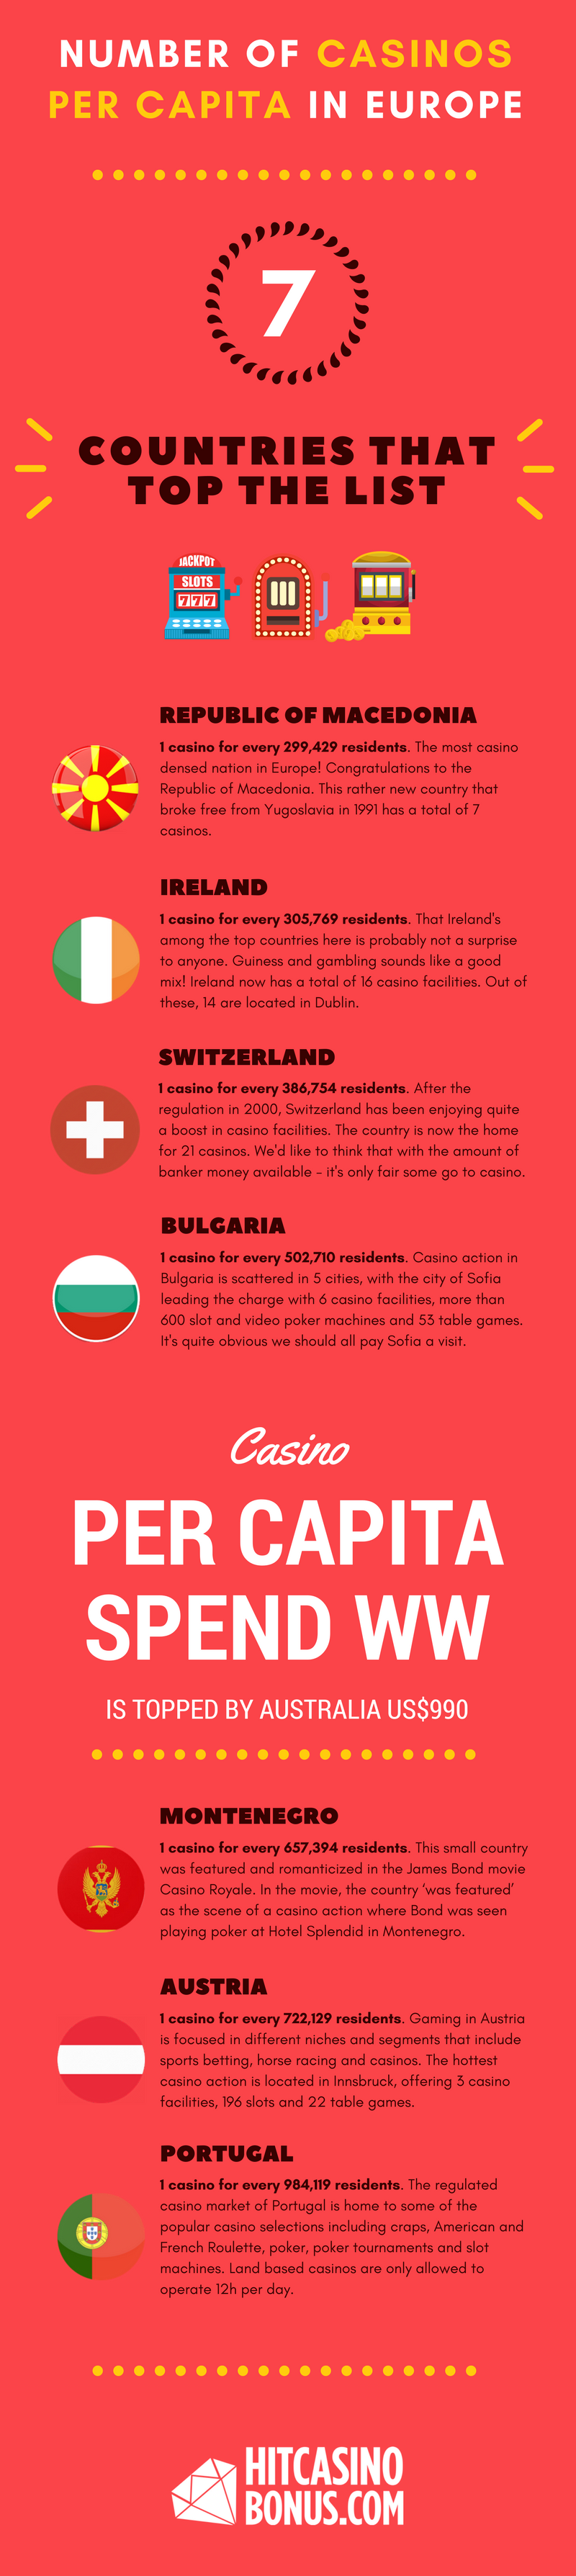 The Highest Number of Casinos Per Capita in Europe